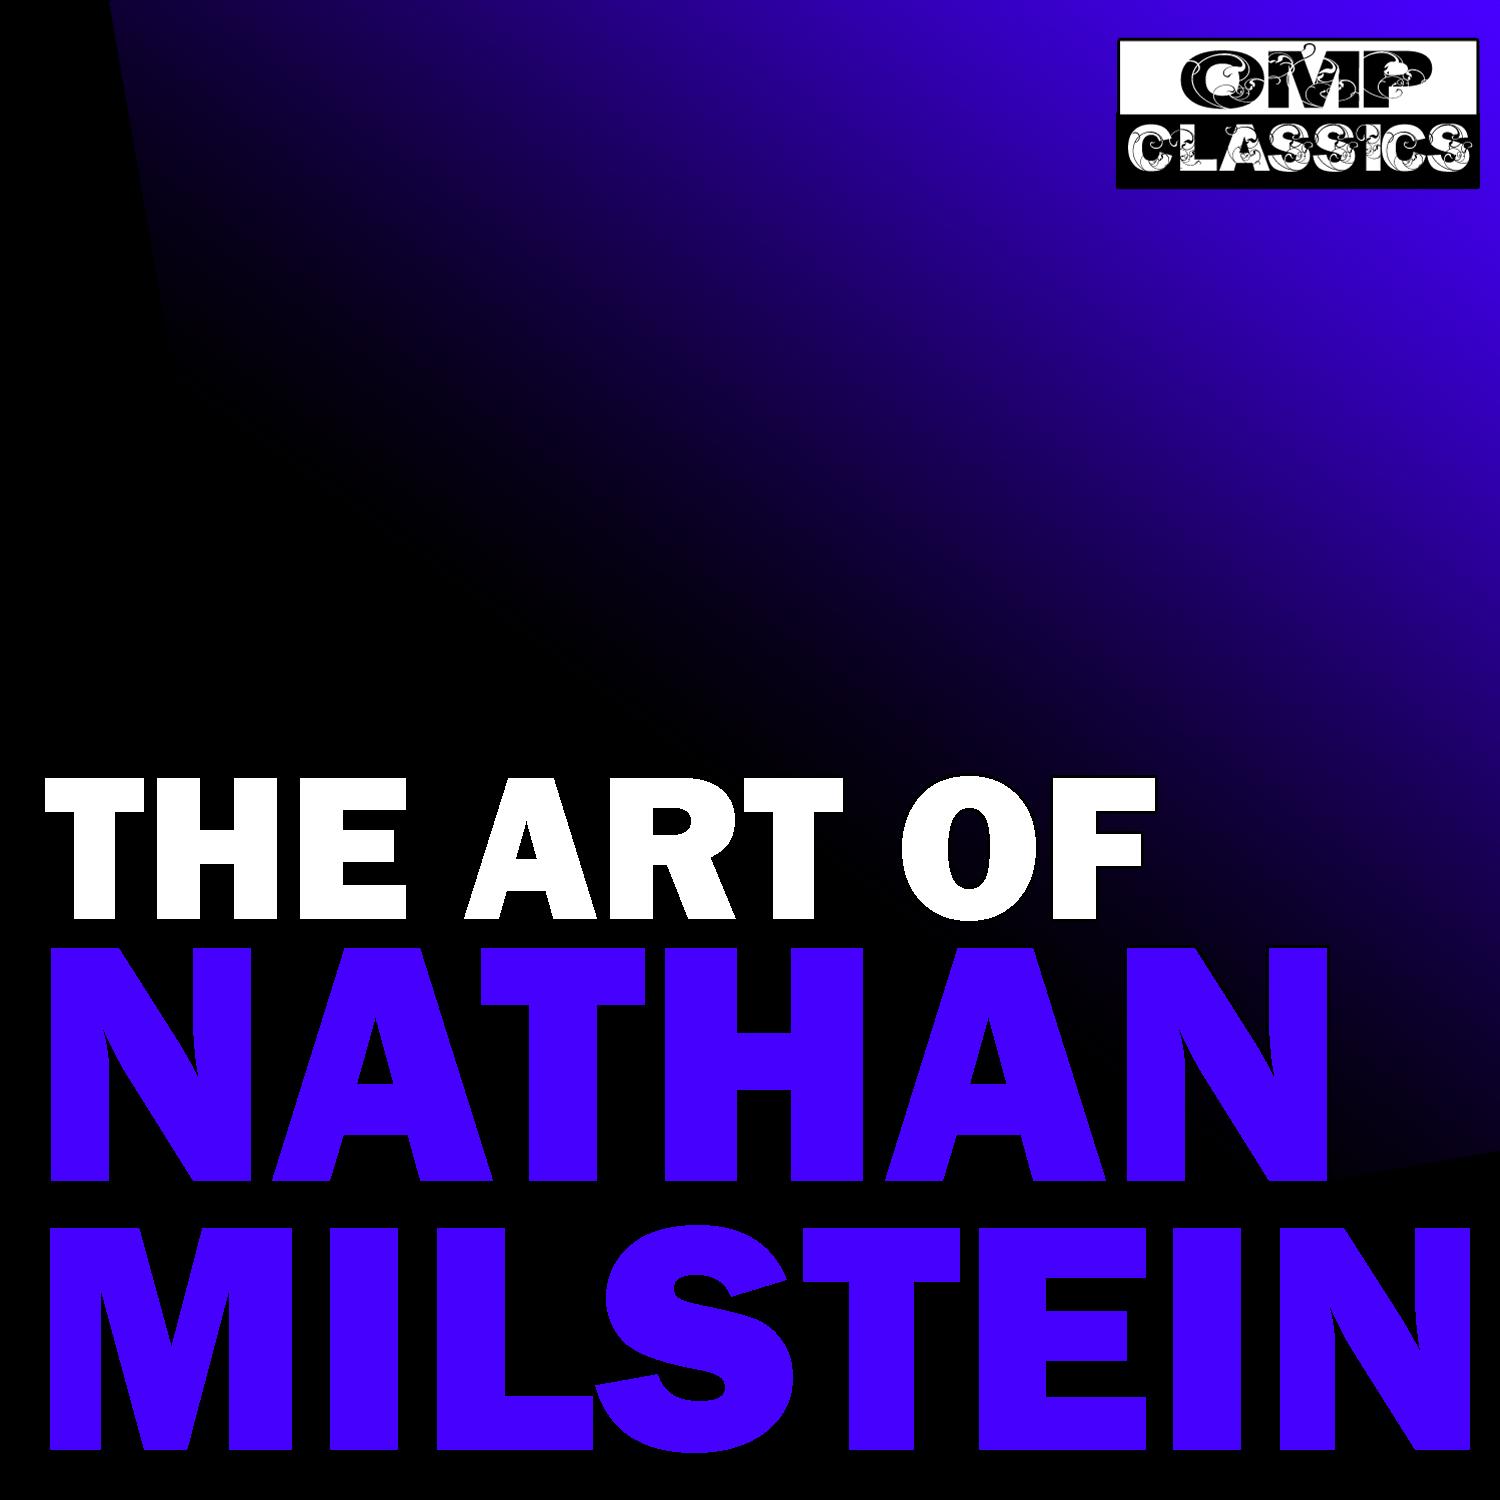 The Art of Nathan Milstein